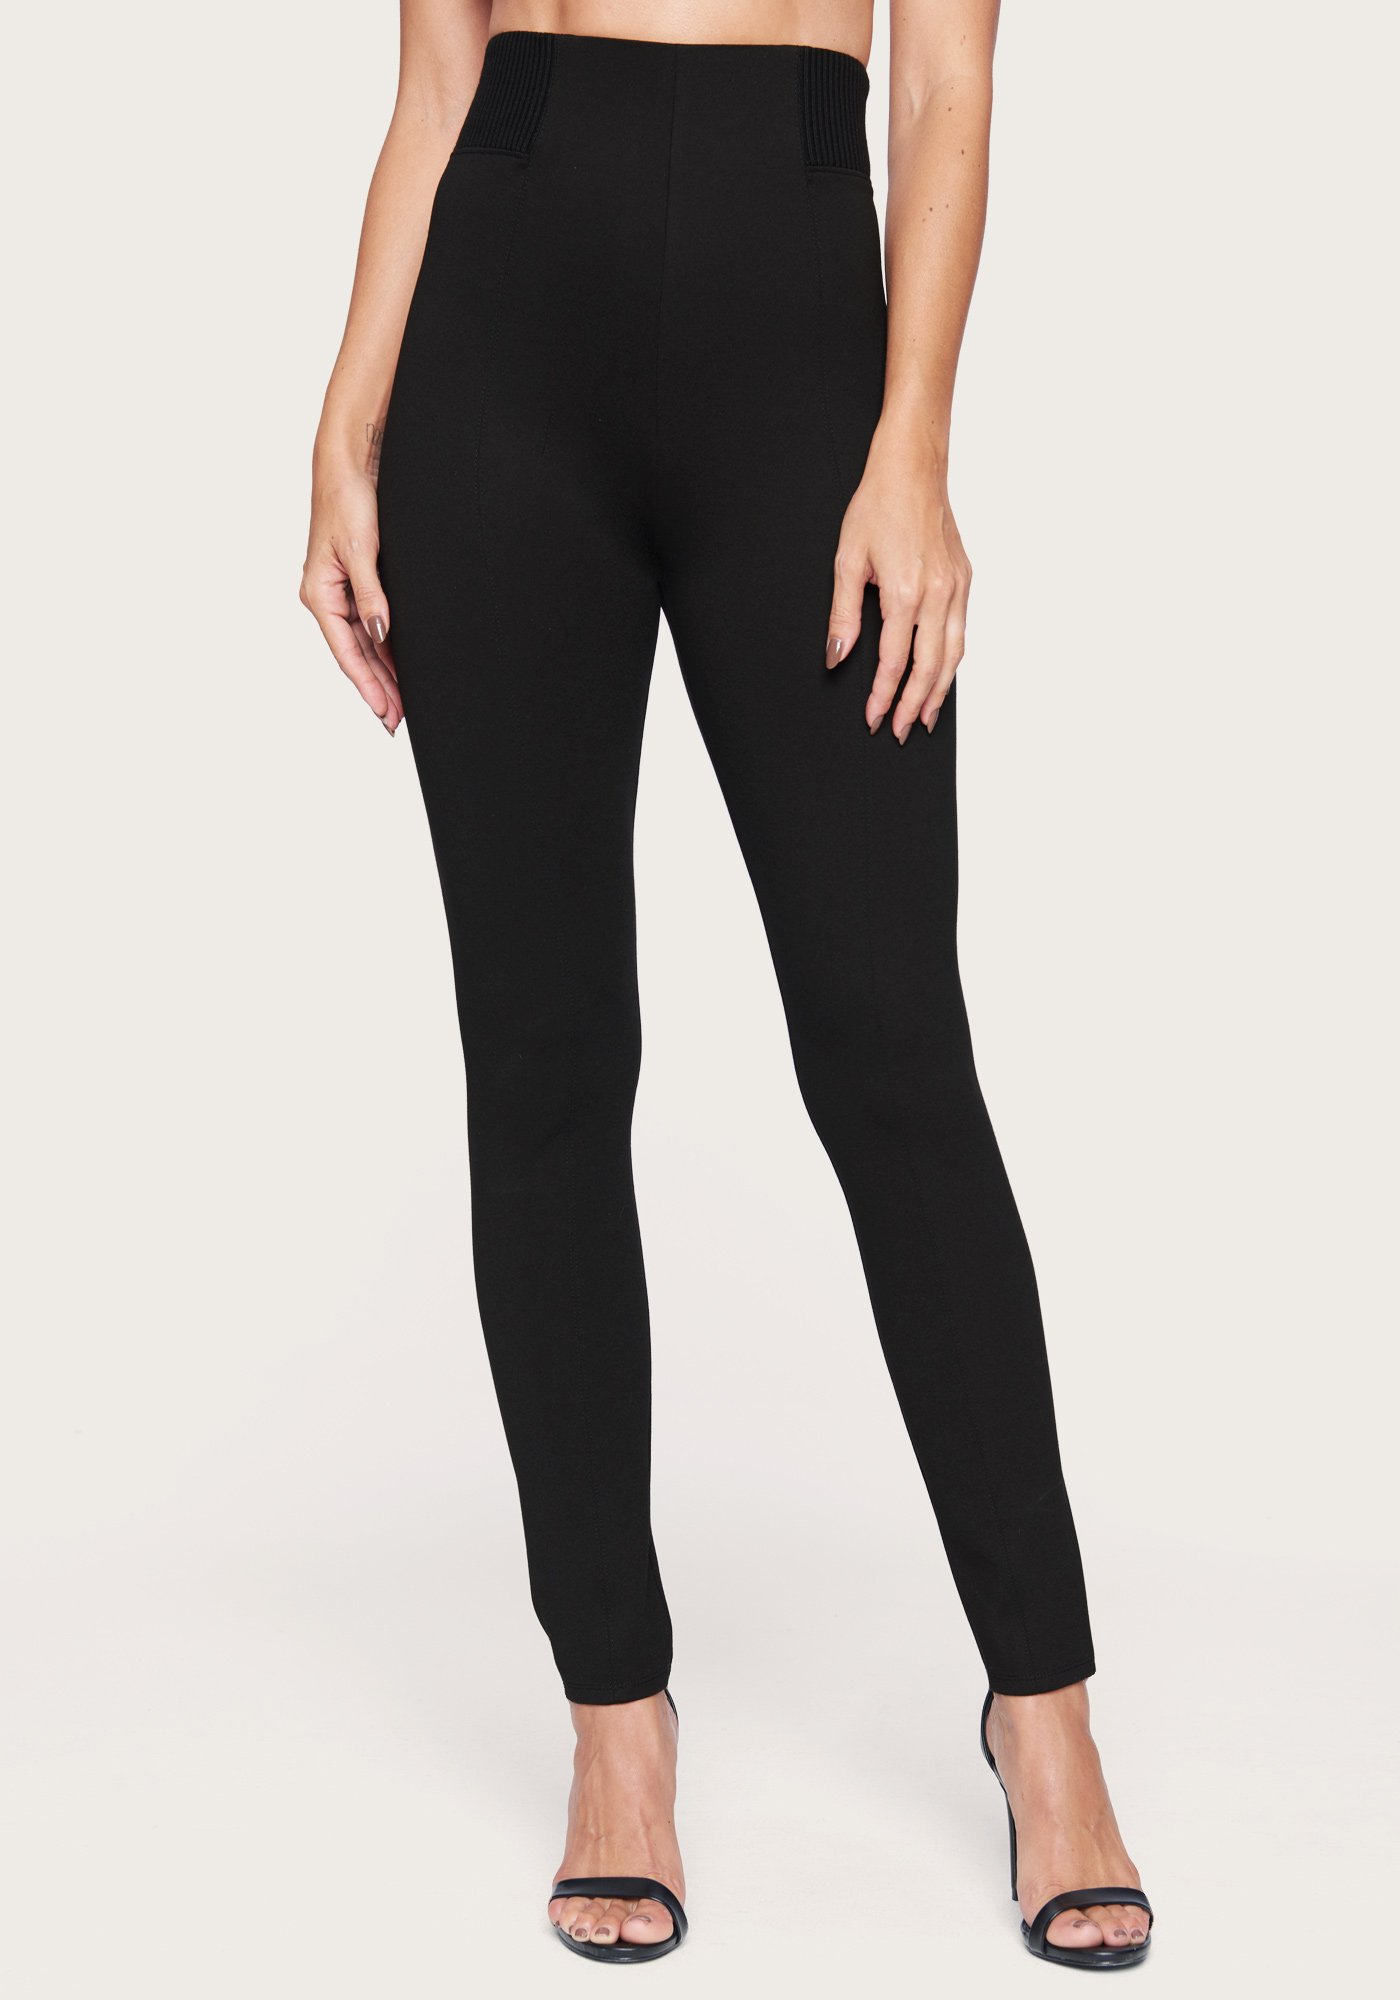 Bebe Women's Front Seam High Waist Legging, Size XL in Black Spandex/Nylon